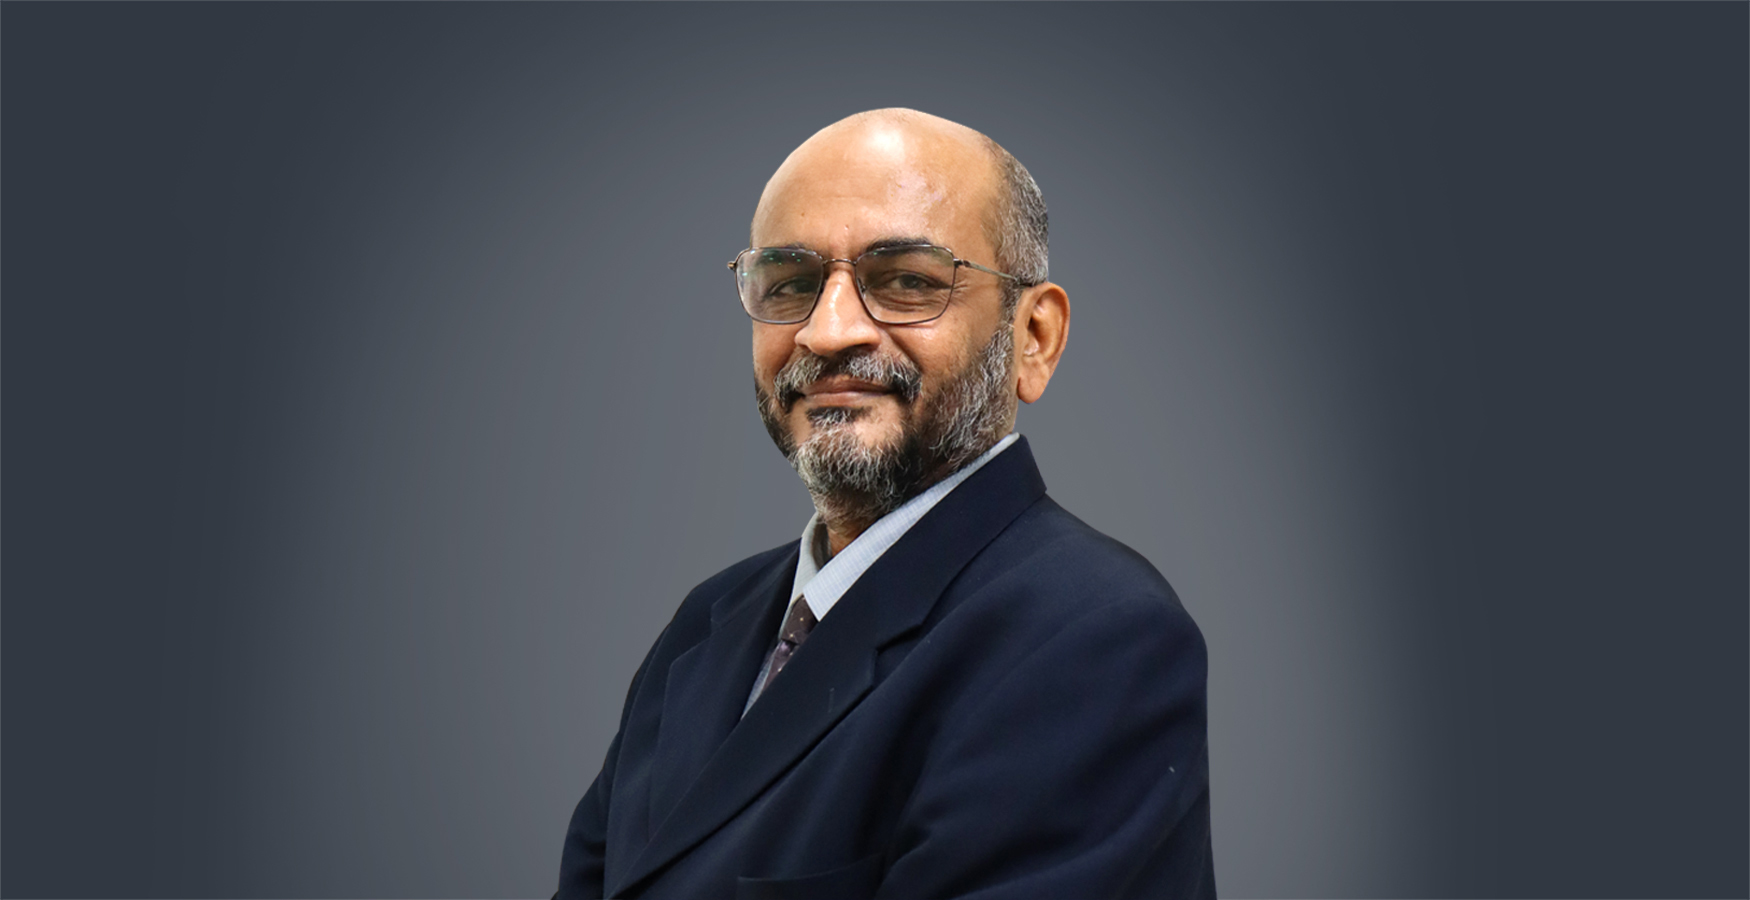 Hari Balachandran, CEO